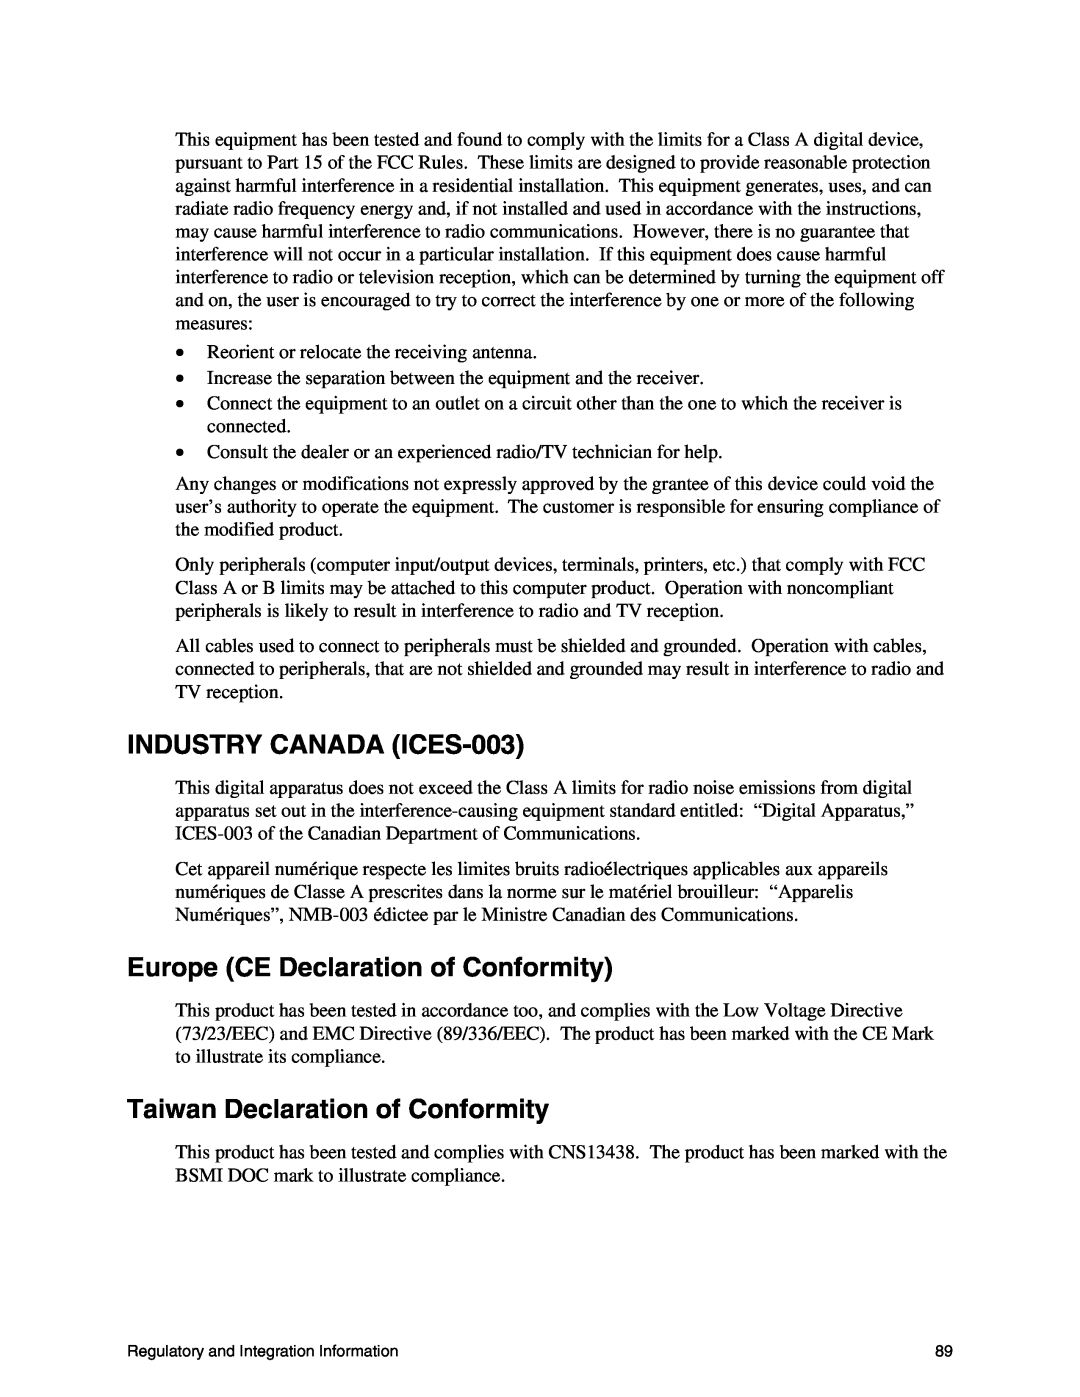 Intel SE7500CW2 manual INDUSTRY CANADA ICES-003, Europe CE Declaration of Conformity, Taiwan Declaration of Conformity 